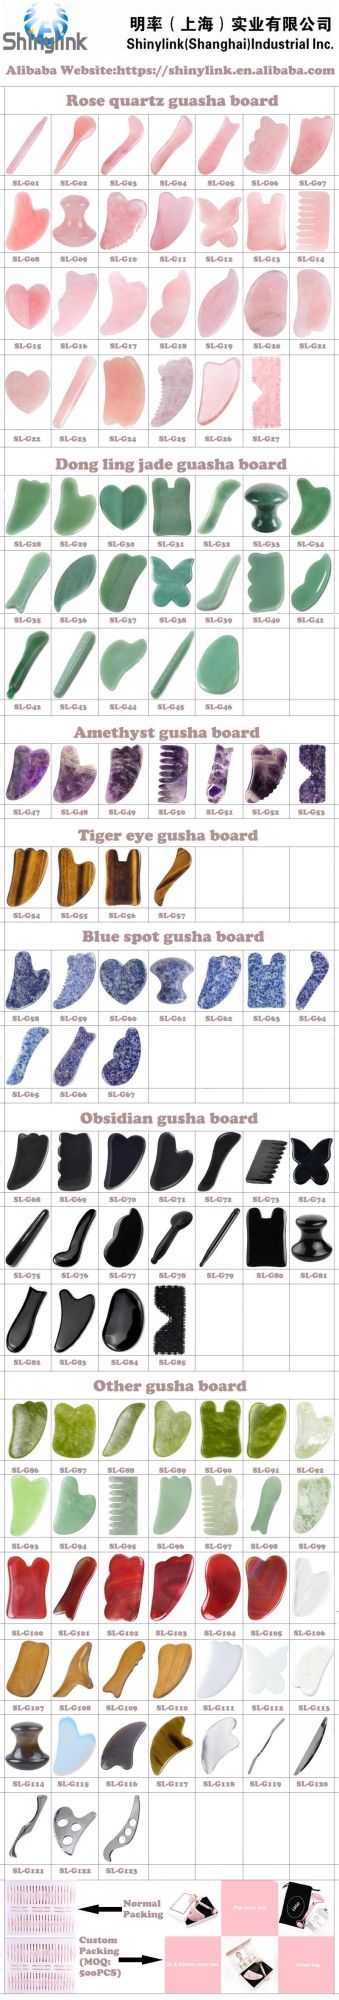 S Shape Bian Stone Guasha Board